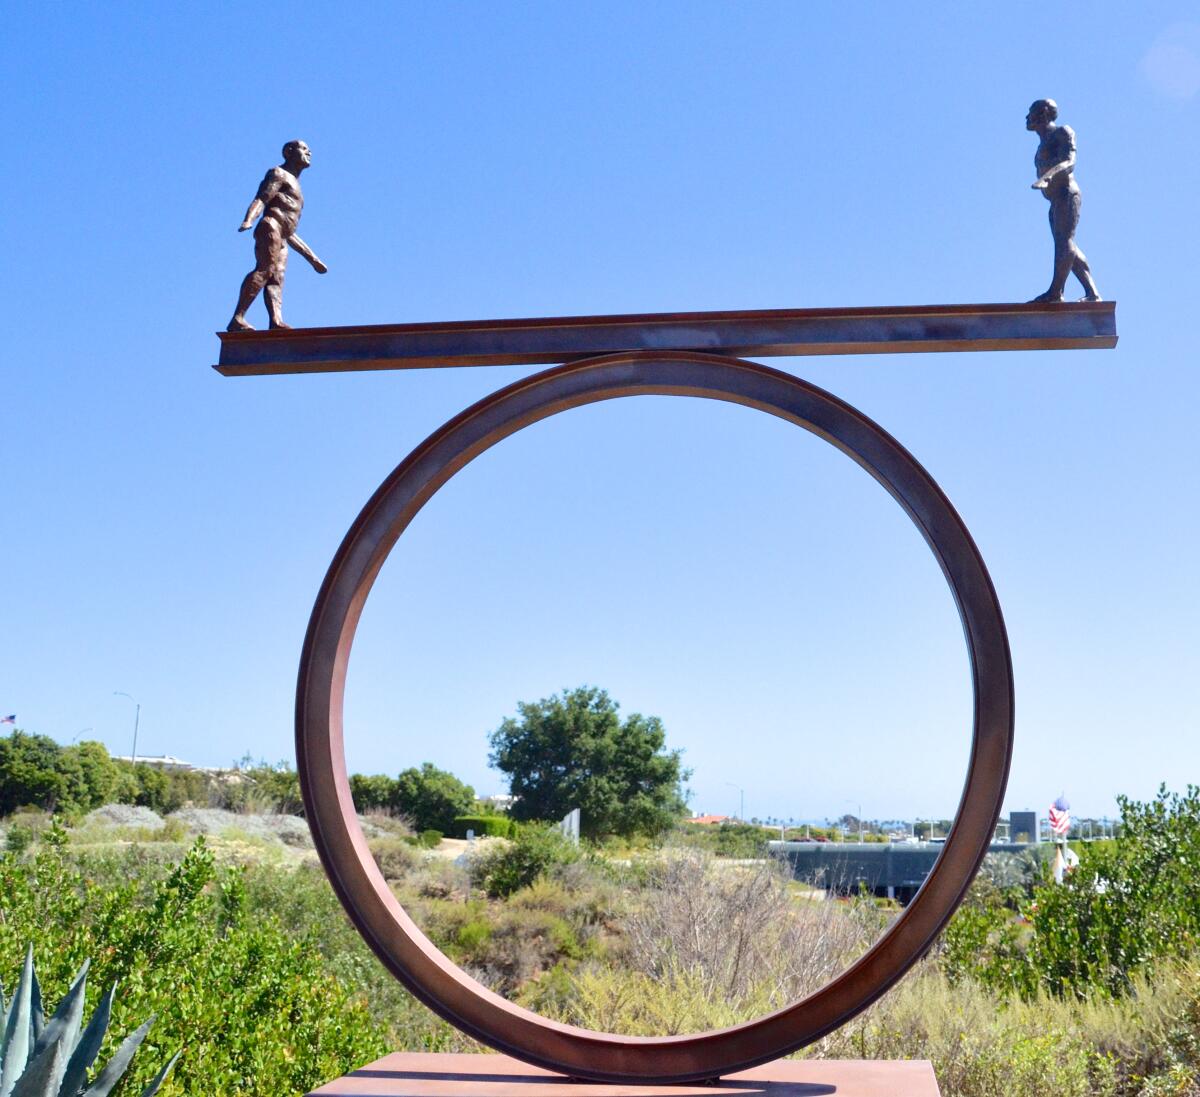 "Duality," by Giuseppe Palumbo, at the Newport Beach Civic Center sculpture garden.